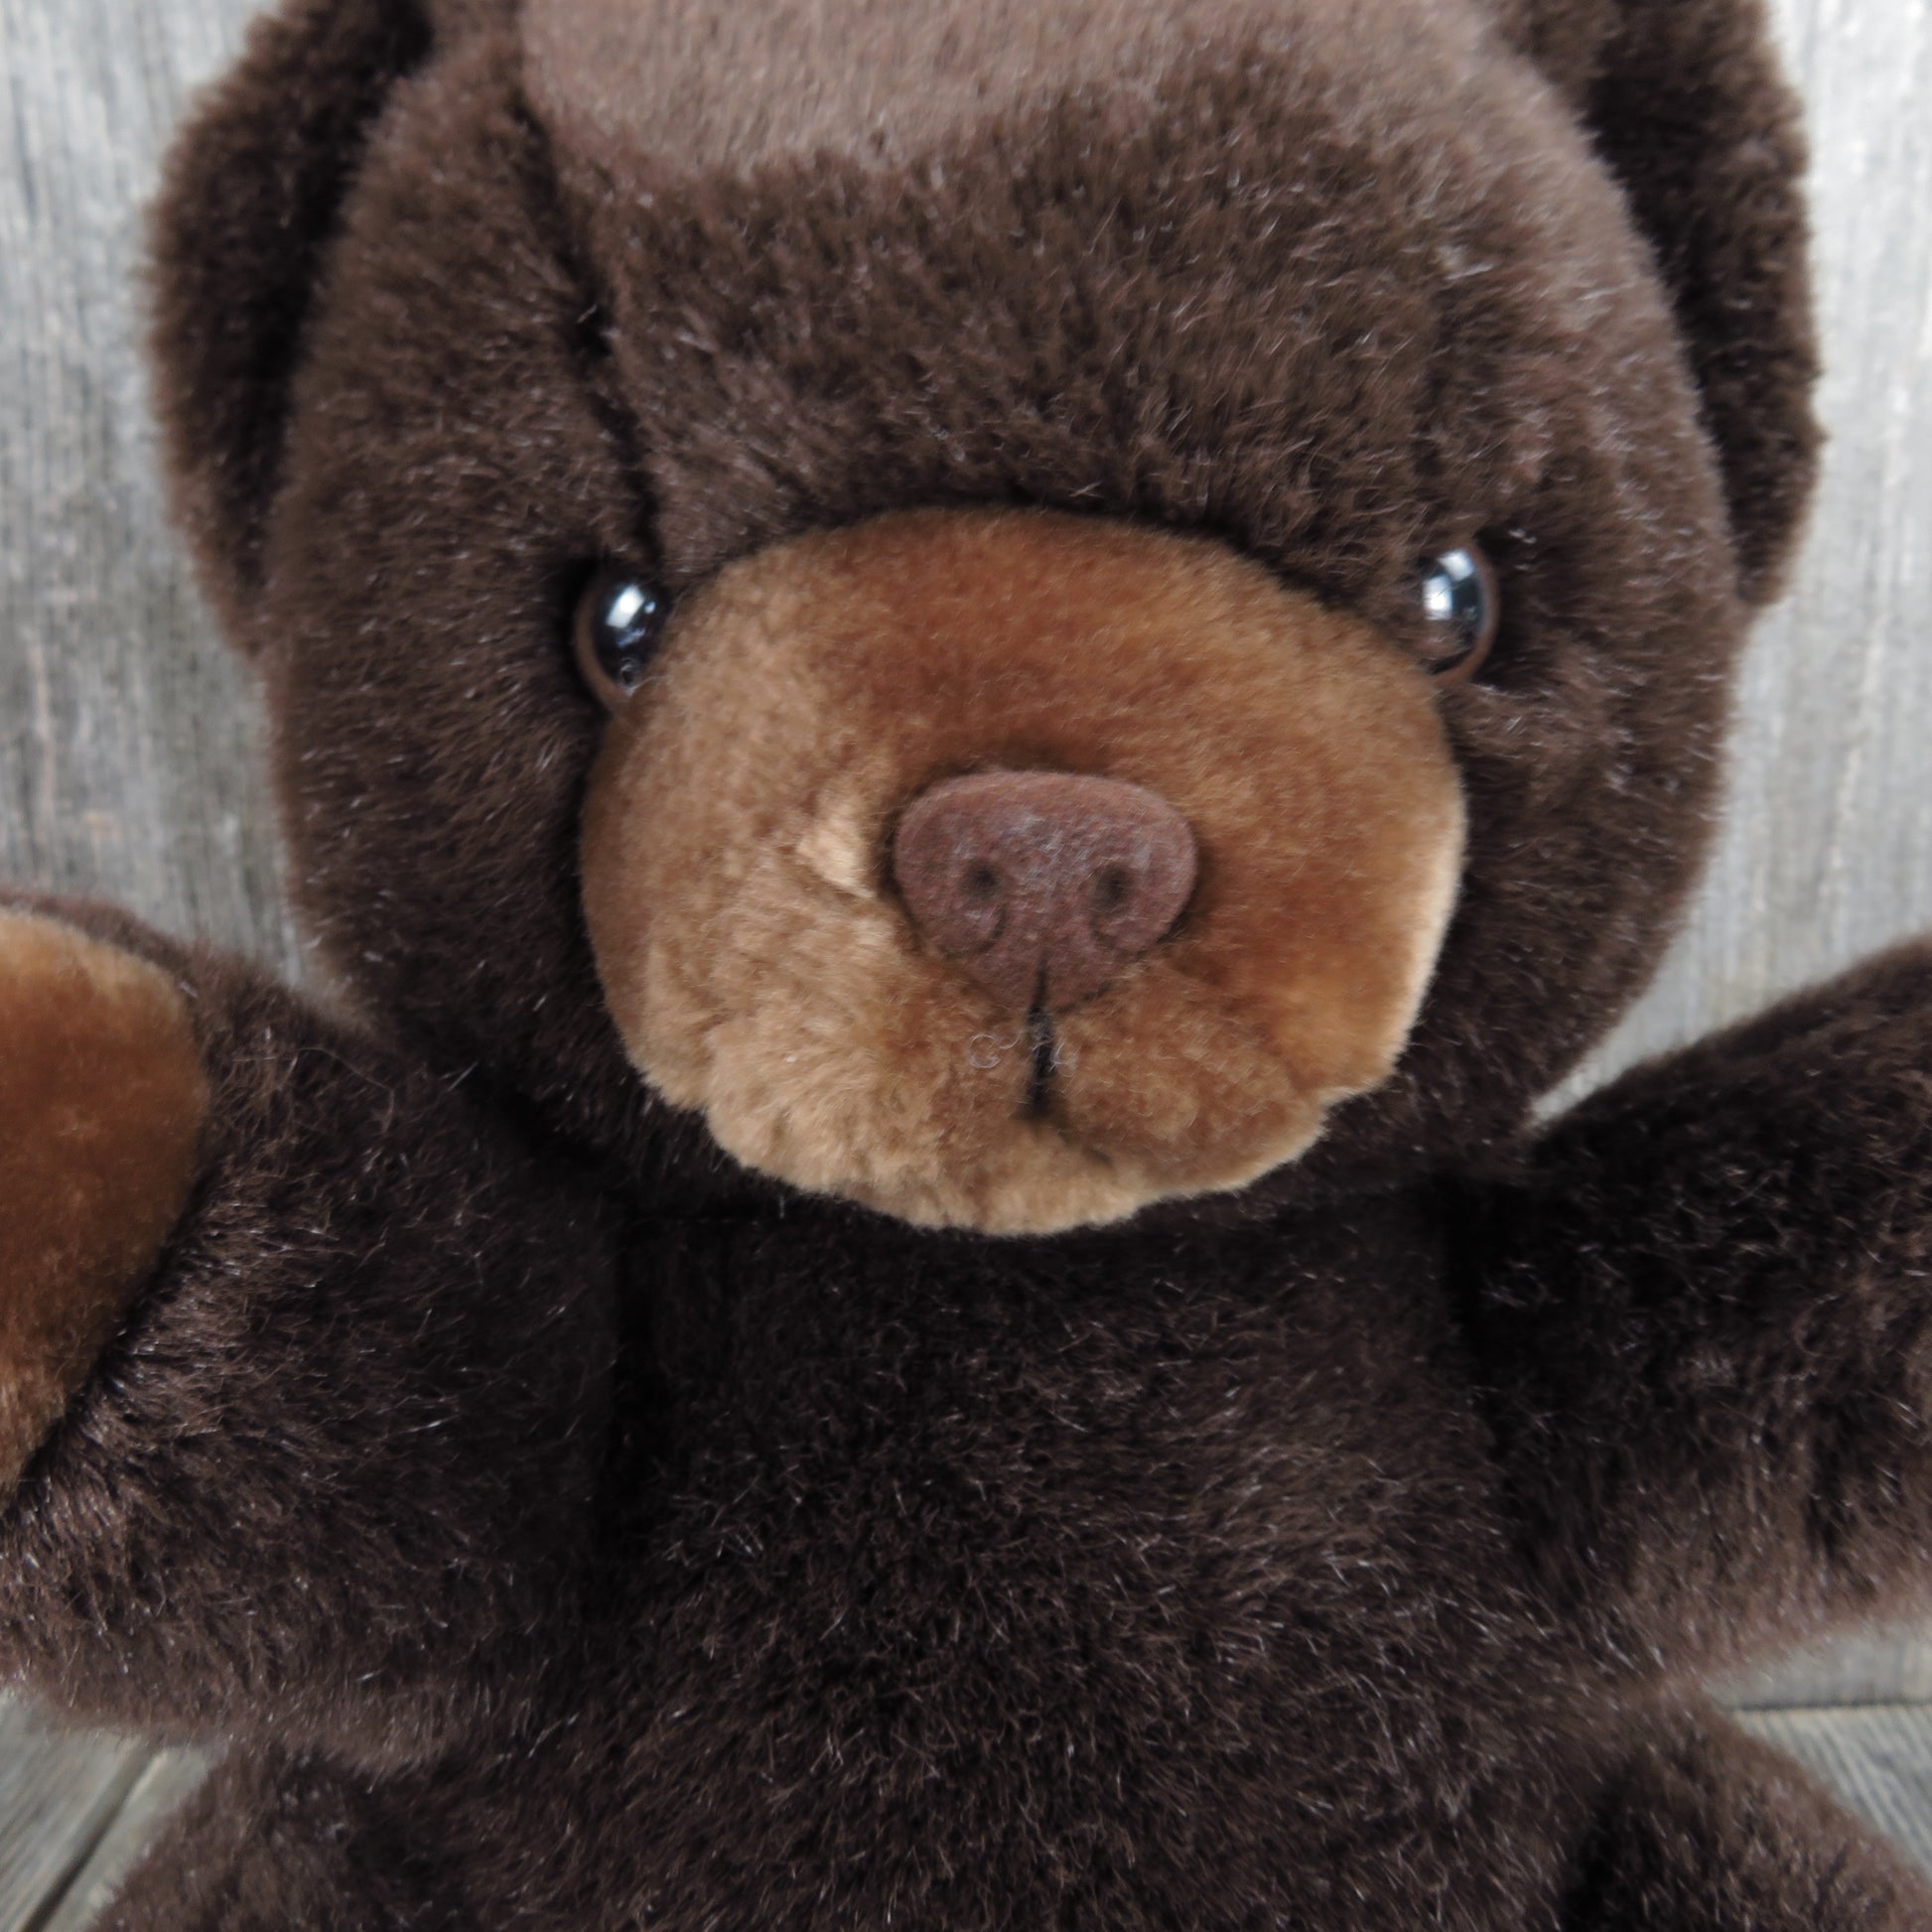 Vintage Teddy Bear Plush Brown Flocked Nose Russ Grizzly Love Pets Stuffed Animal Korea Short Legs - At Grandma's Table